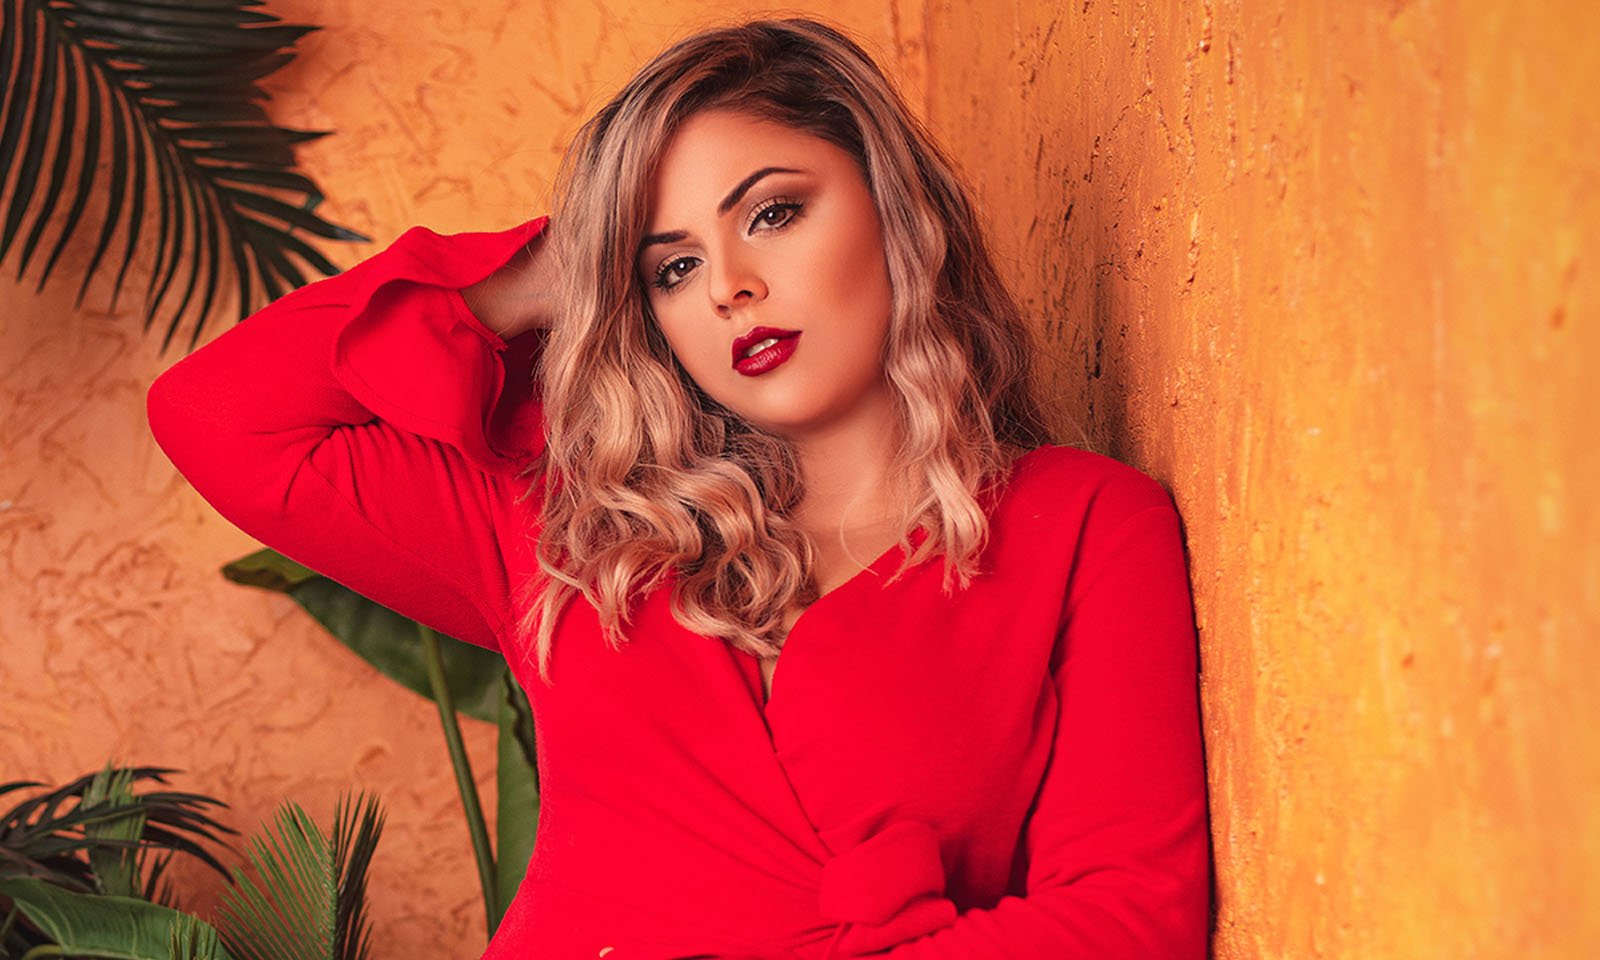 Nanda Loren lança “Miragen”, seu mais novo single sobre relacionamentos unilaterais